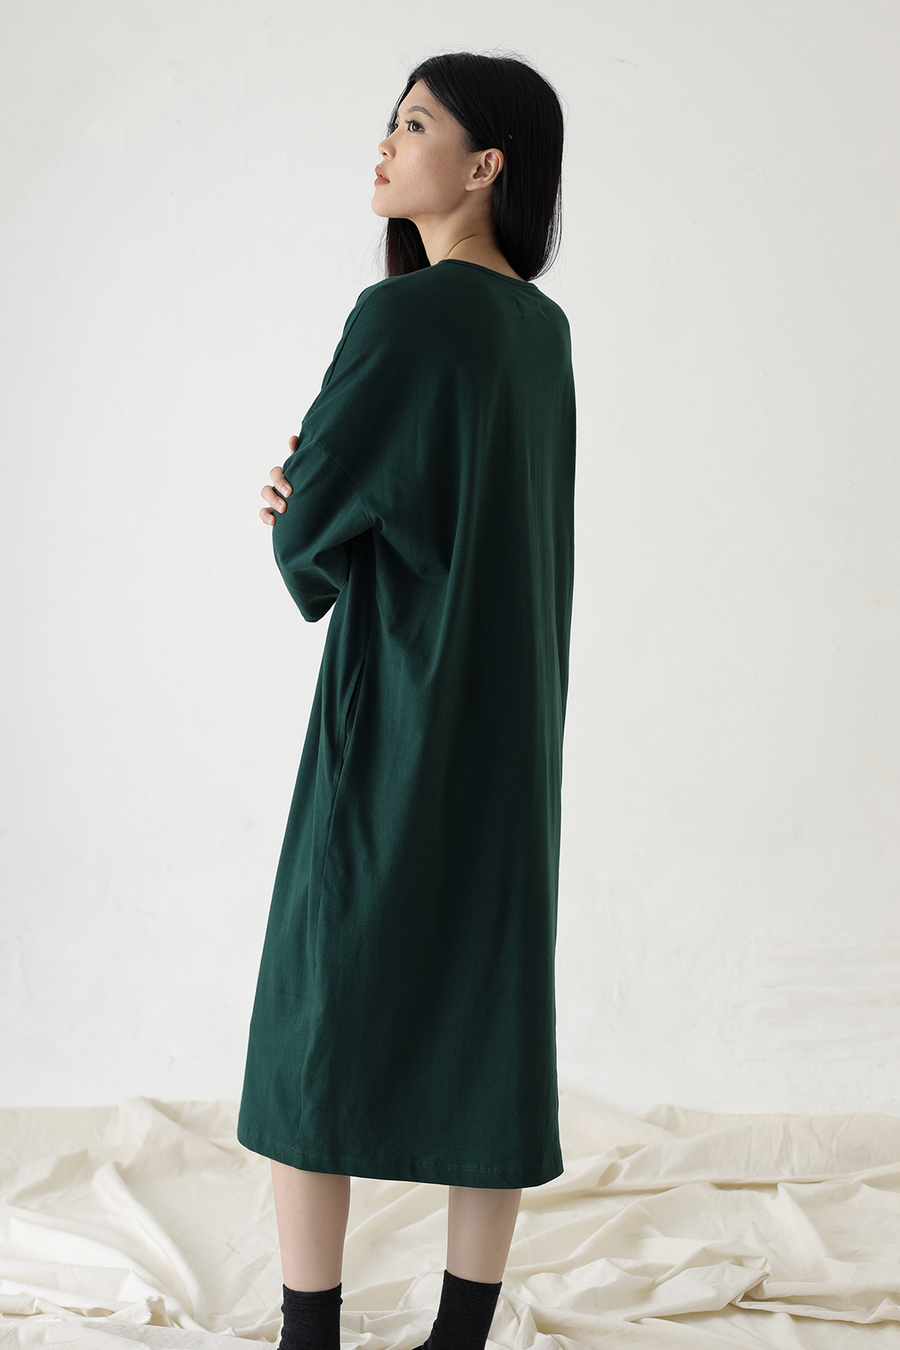 Dark Green Billow Dress